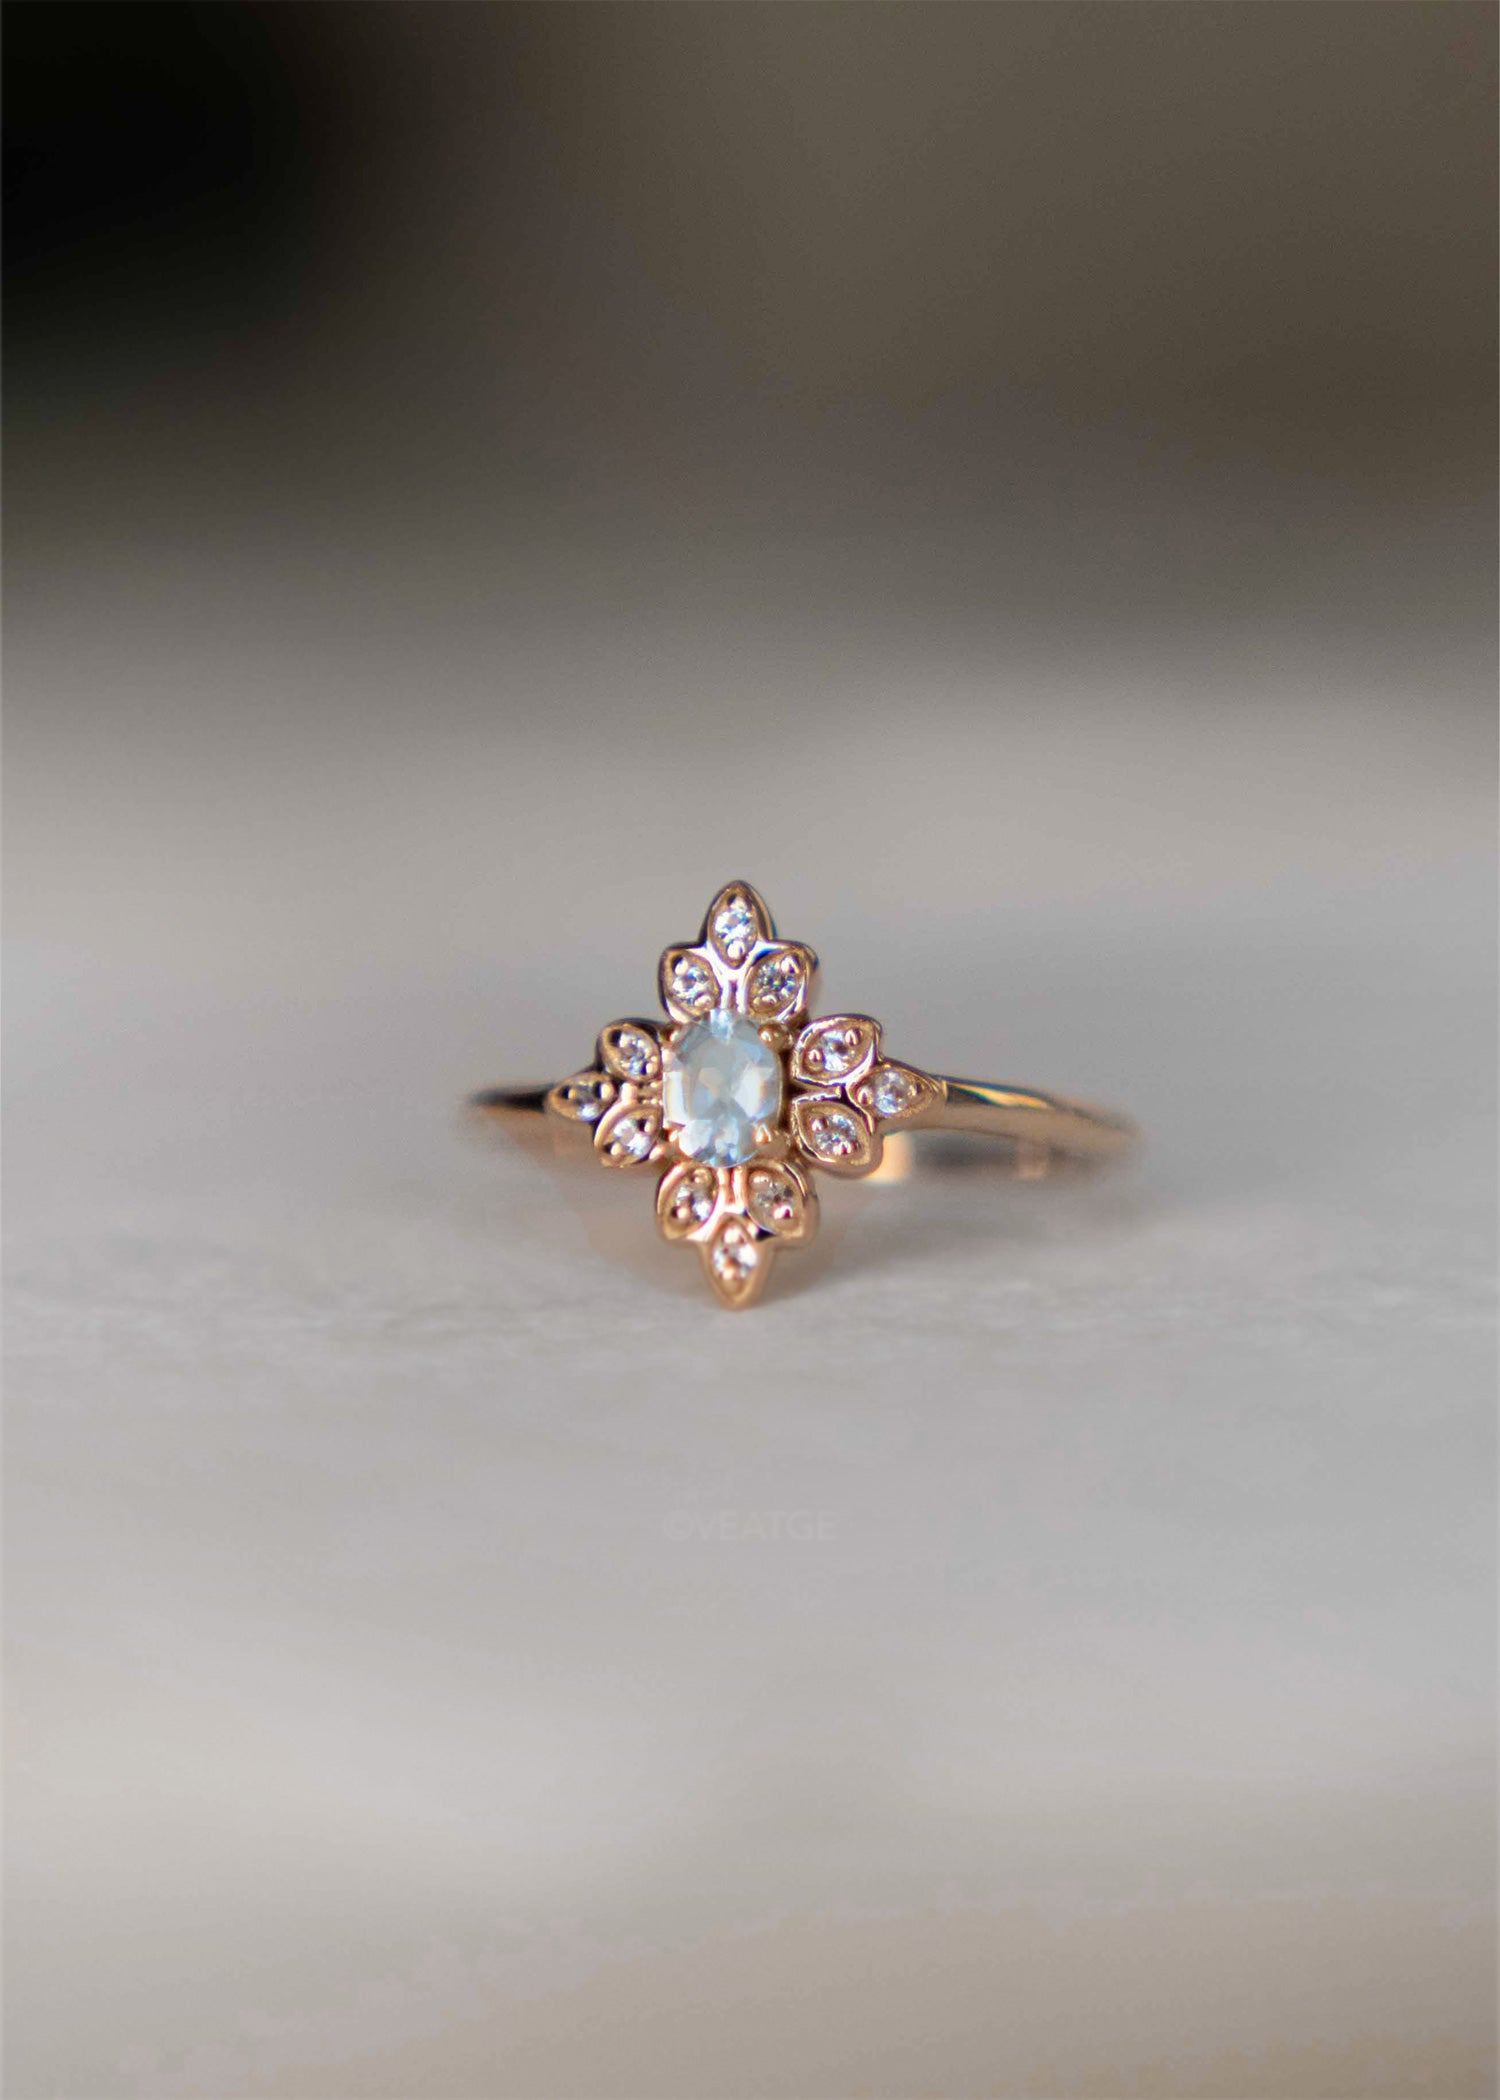 Alora Aquamarine Ring March birthstone genuine natural gemstone birthday anniversary gift for women girlfriend engagement ring vintage Edwardian style